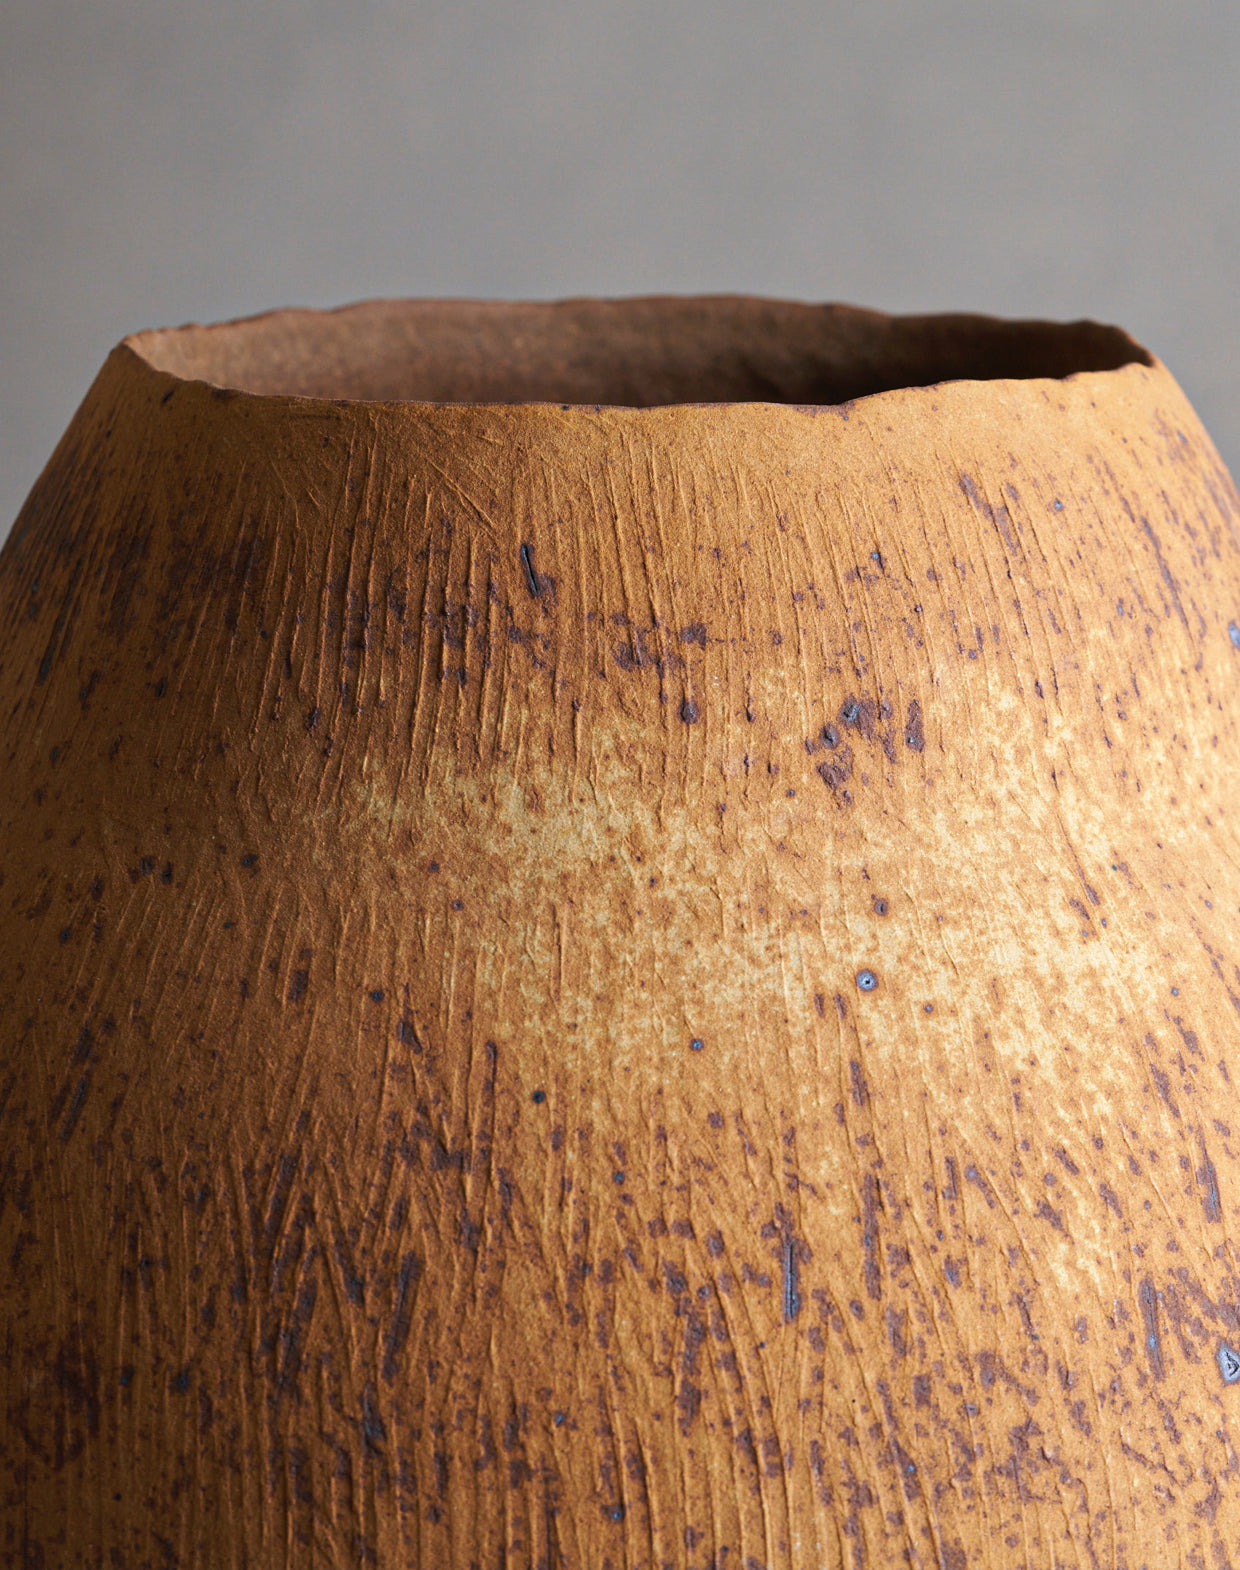 Rick Hintze Coiled Stoneware Vessel, "Untitled" No. 02